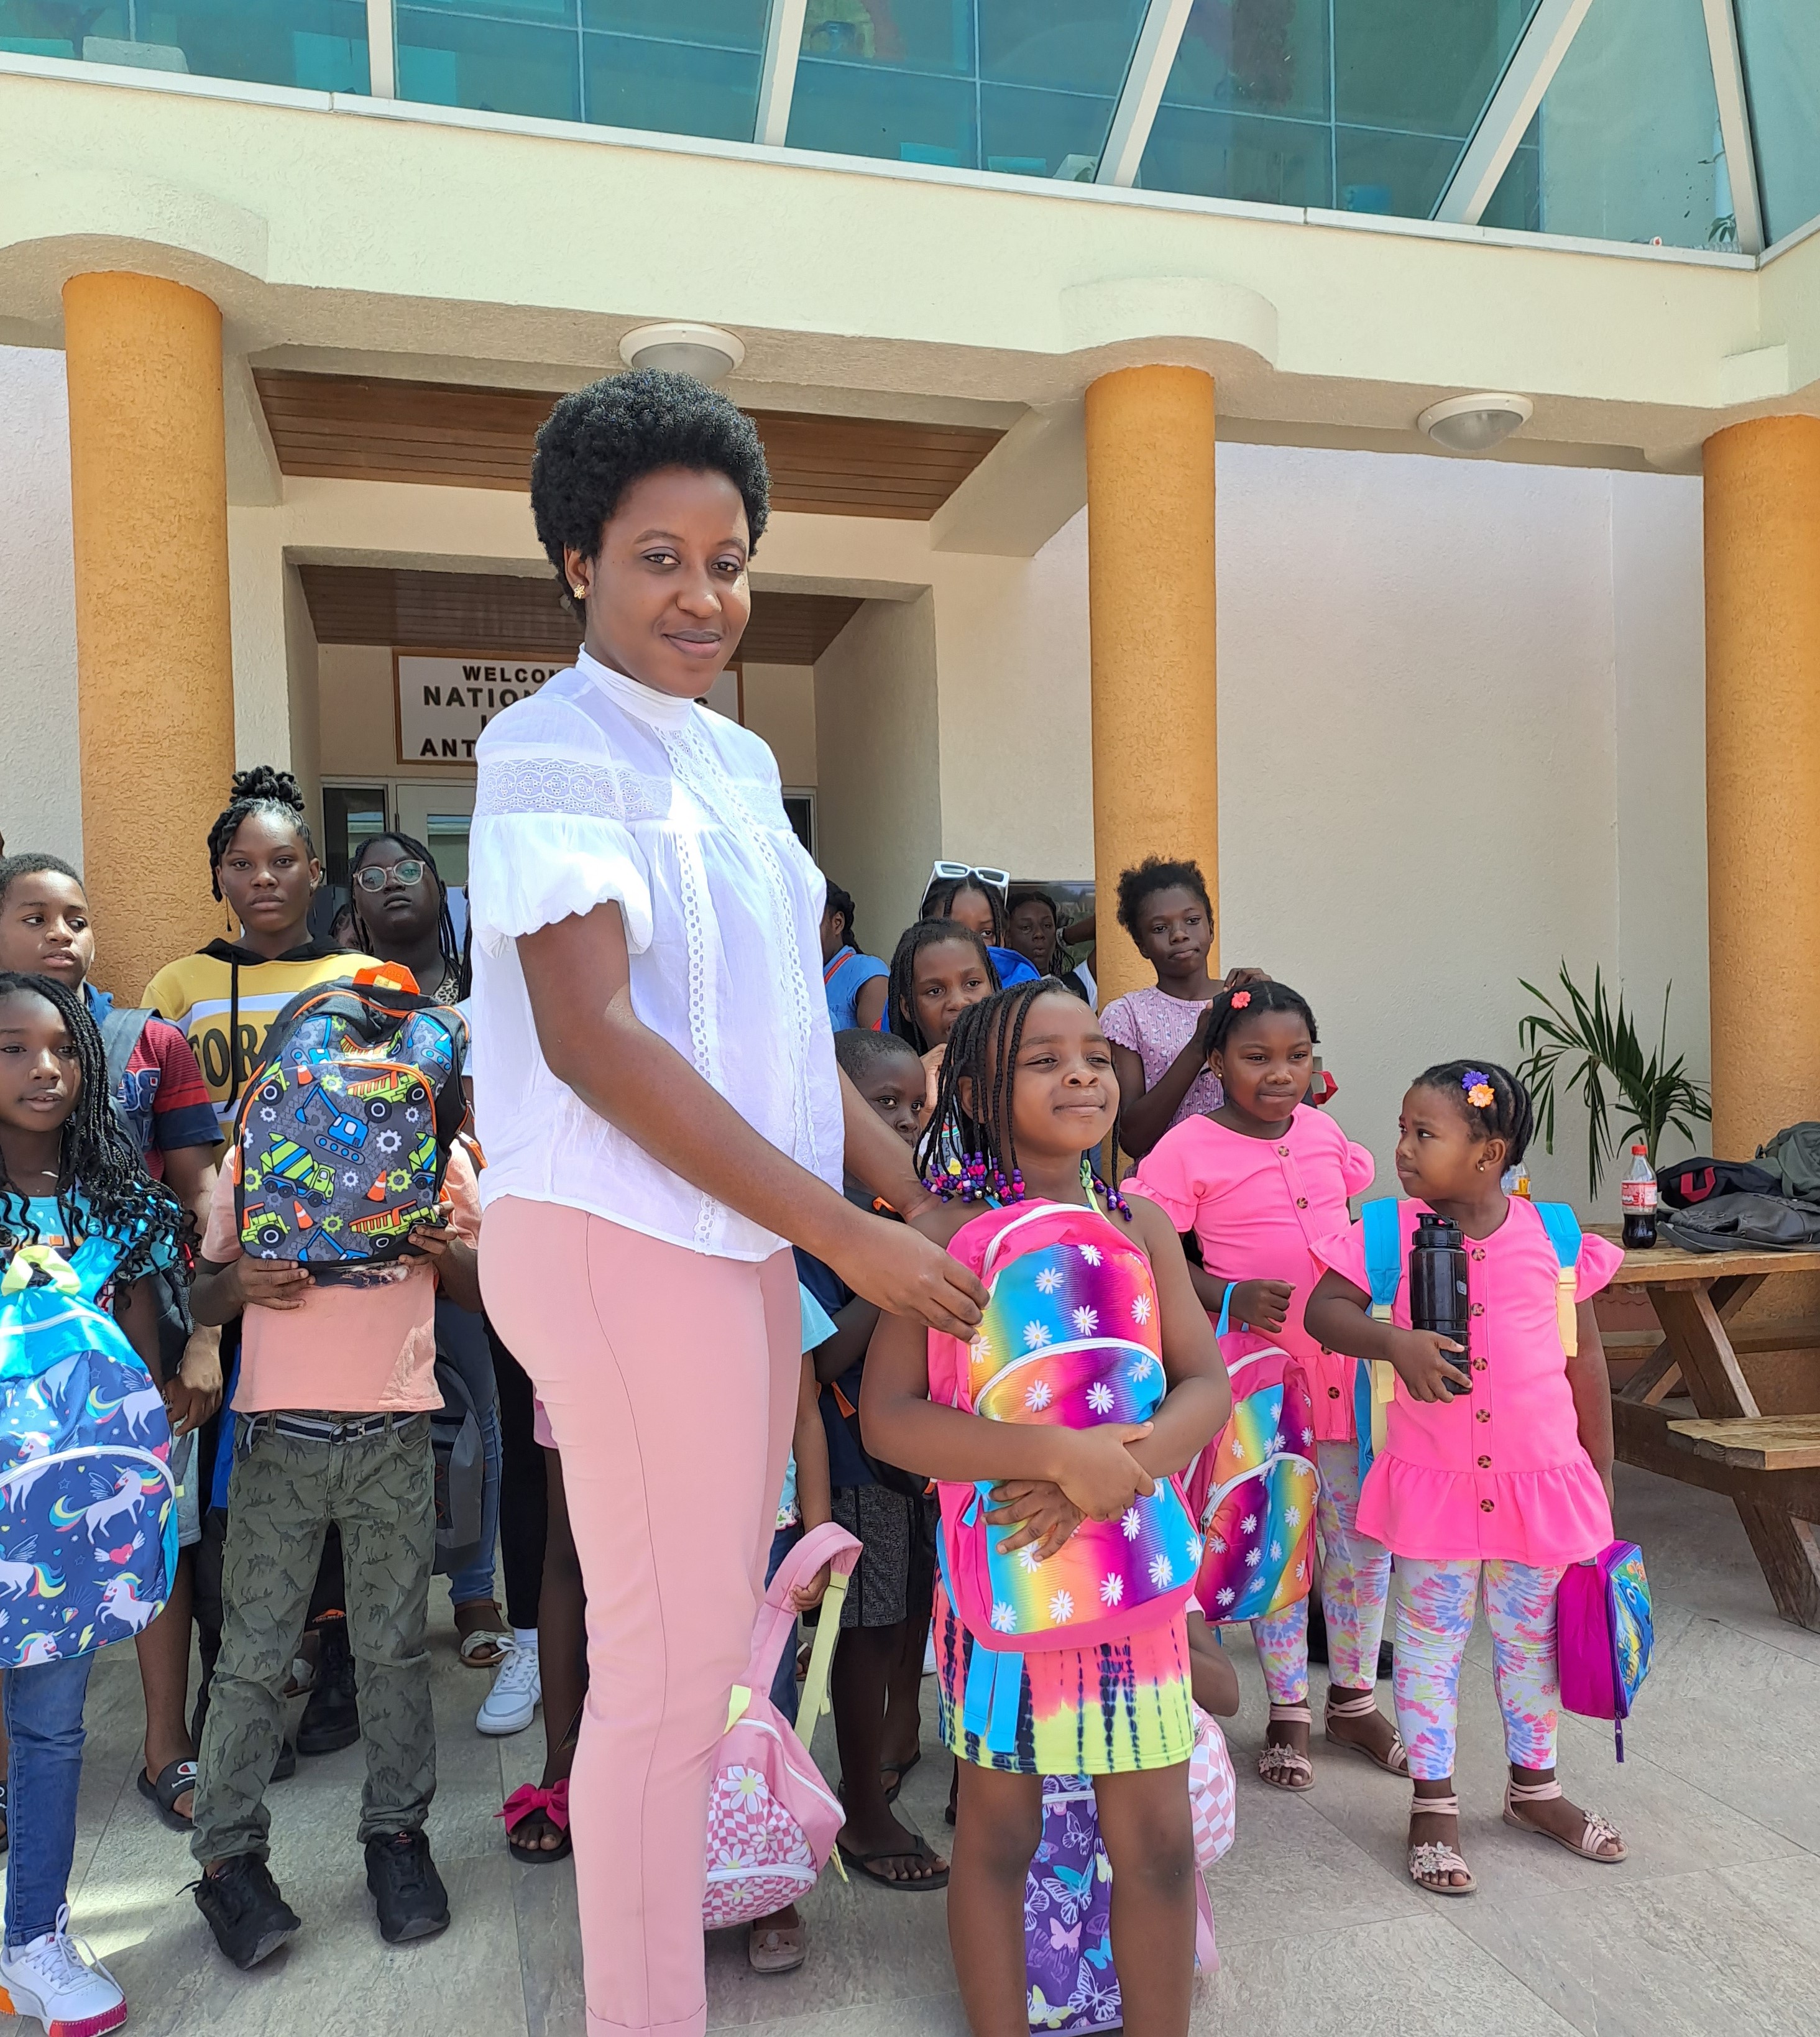 Antigua Cruise Port Sponsors National Public Library of Antigua & Barbuda's Summer Reading Programme